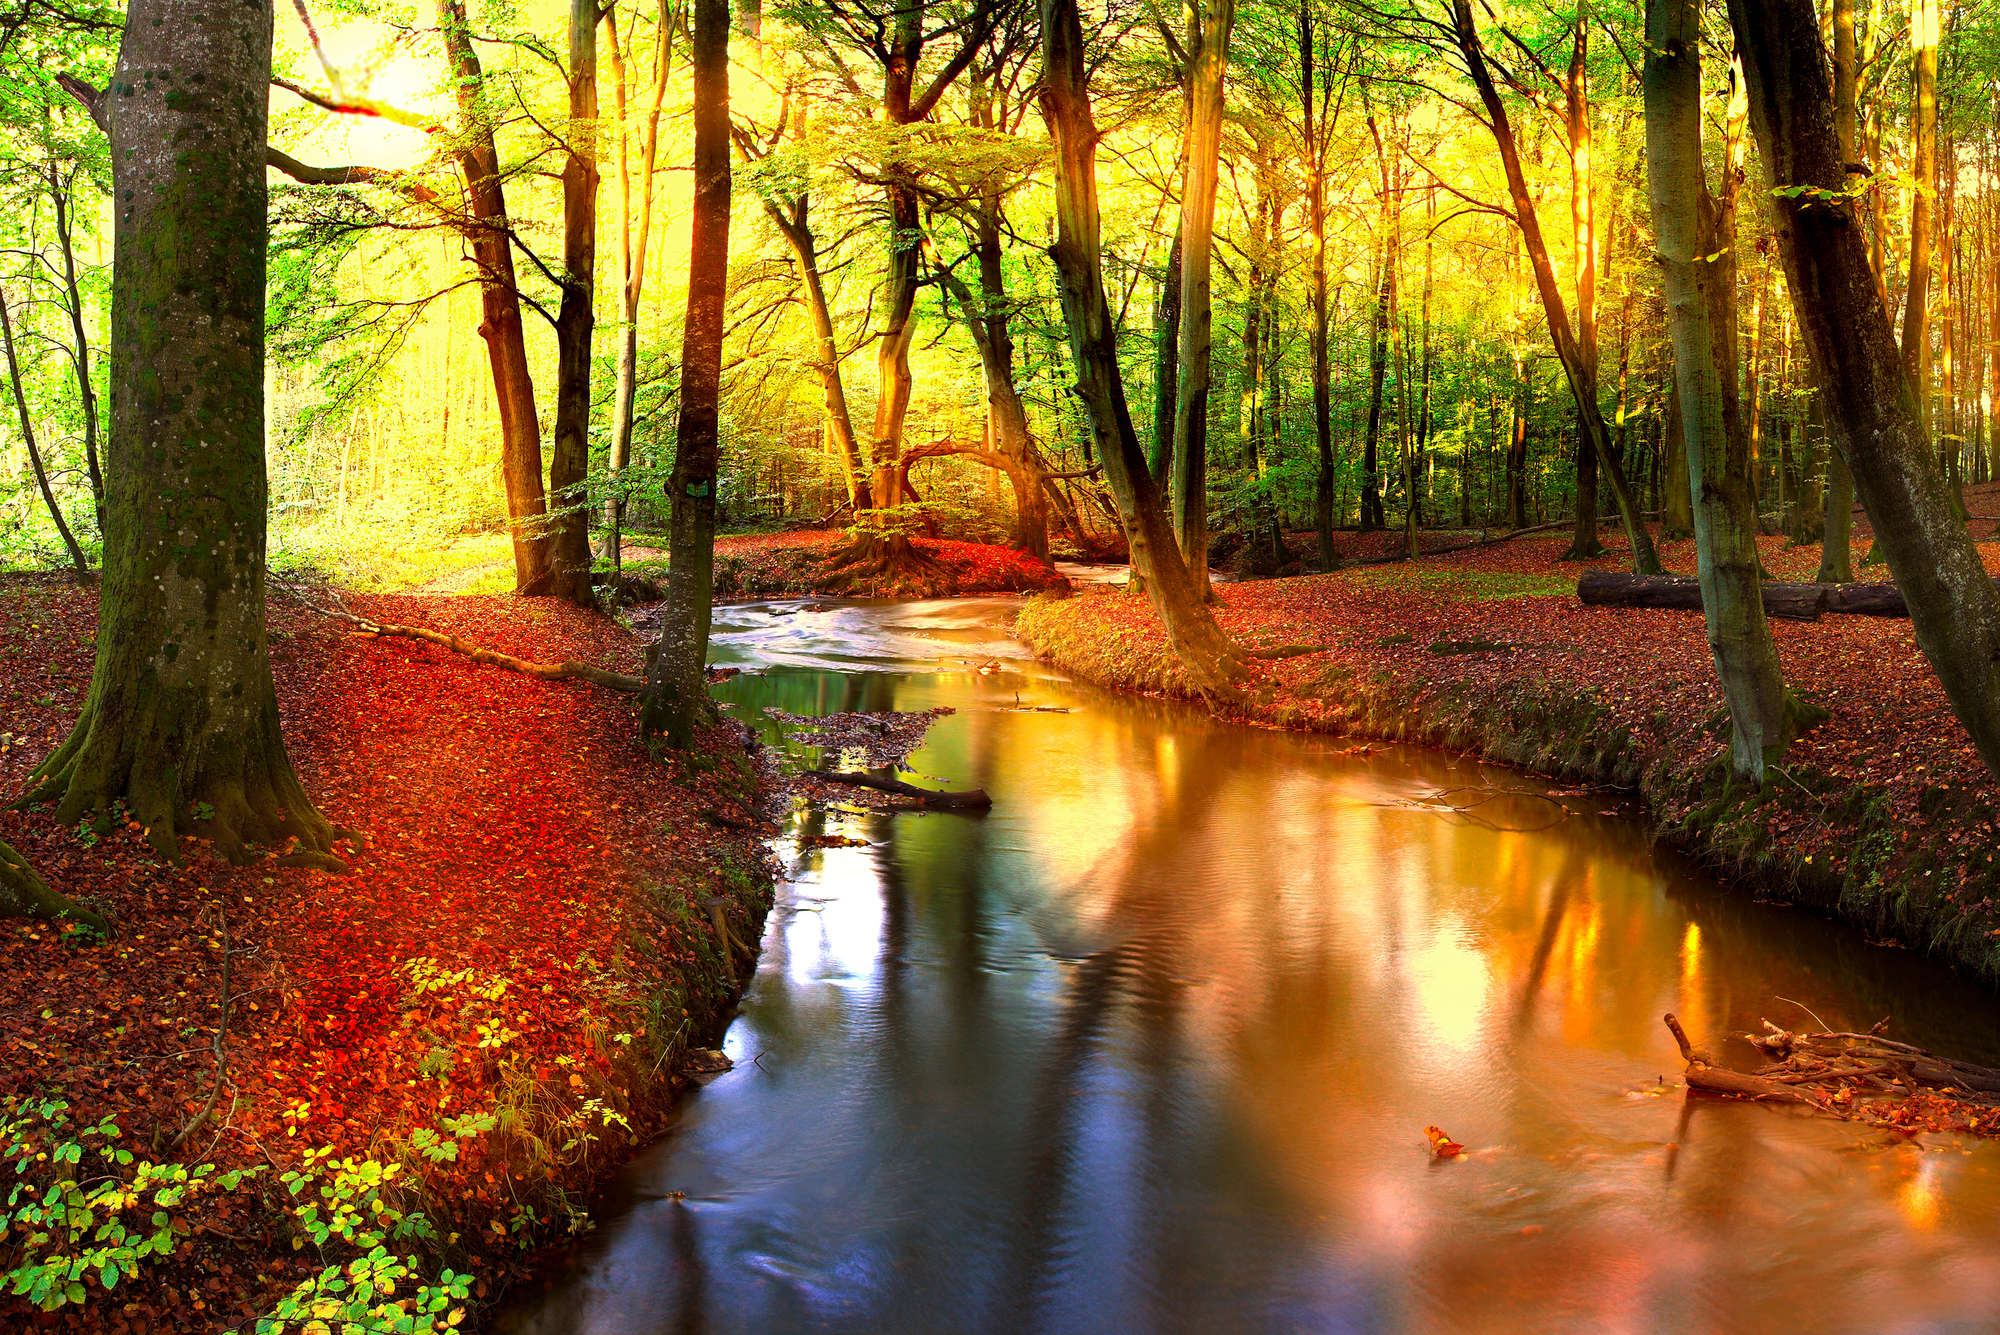             Natur Fototapete Fluss durch Laubwald – Premium Glattvlies
        